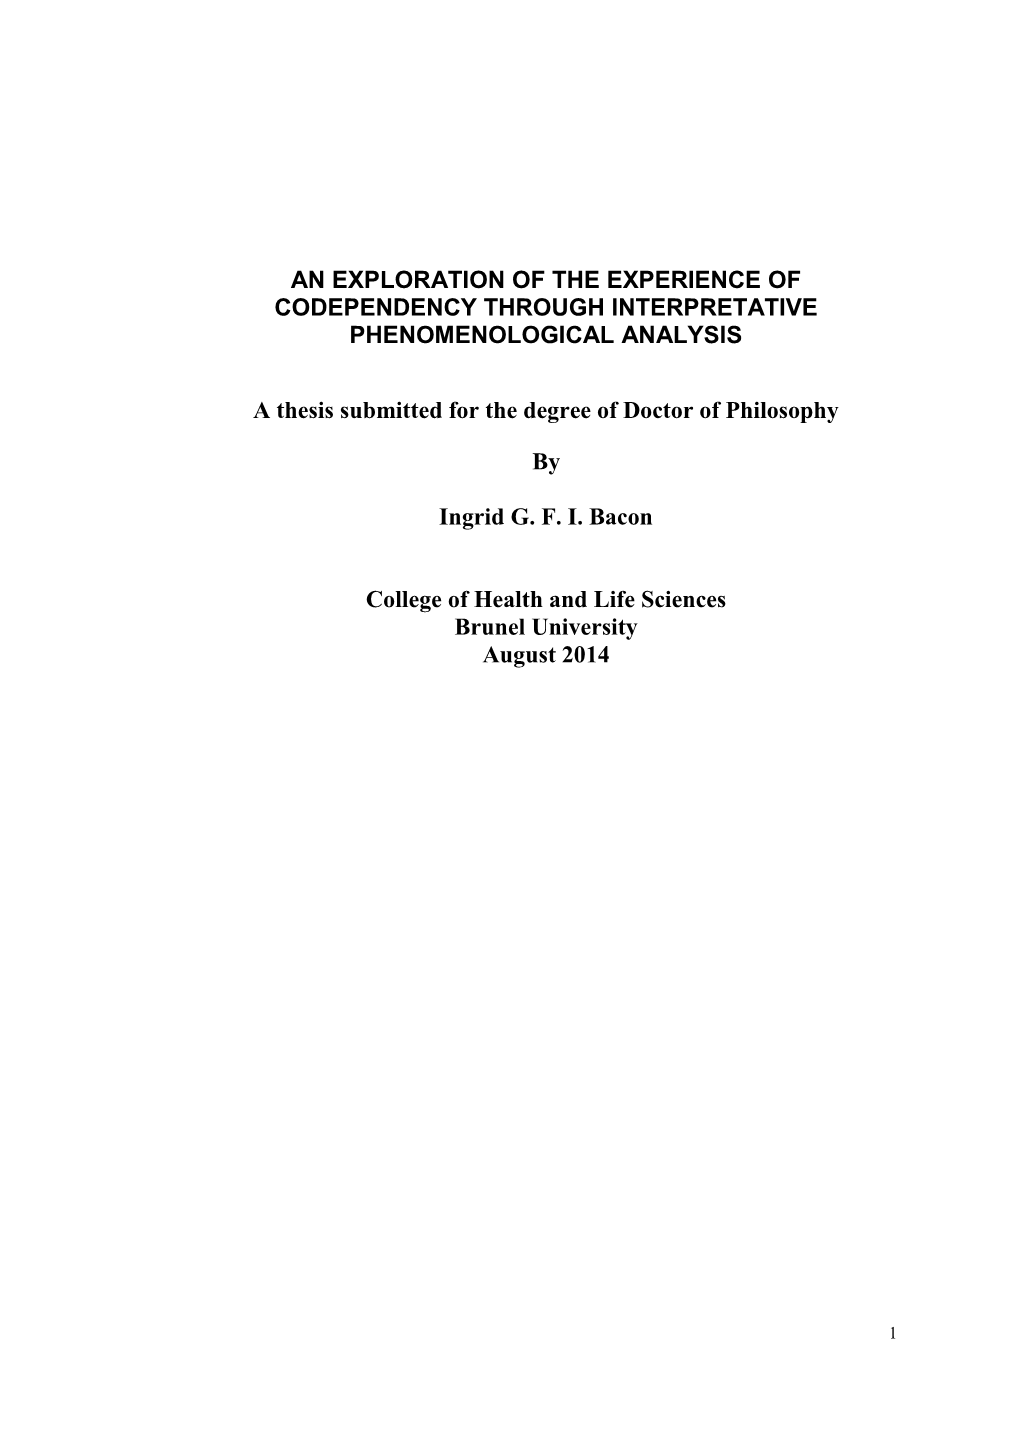 dissertation interpretative phenomenological analysis